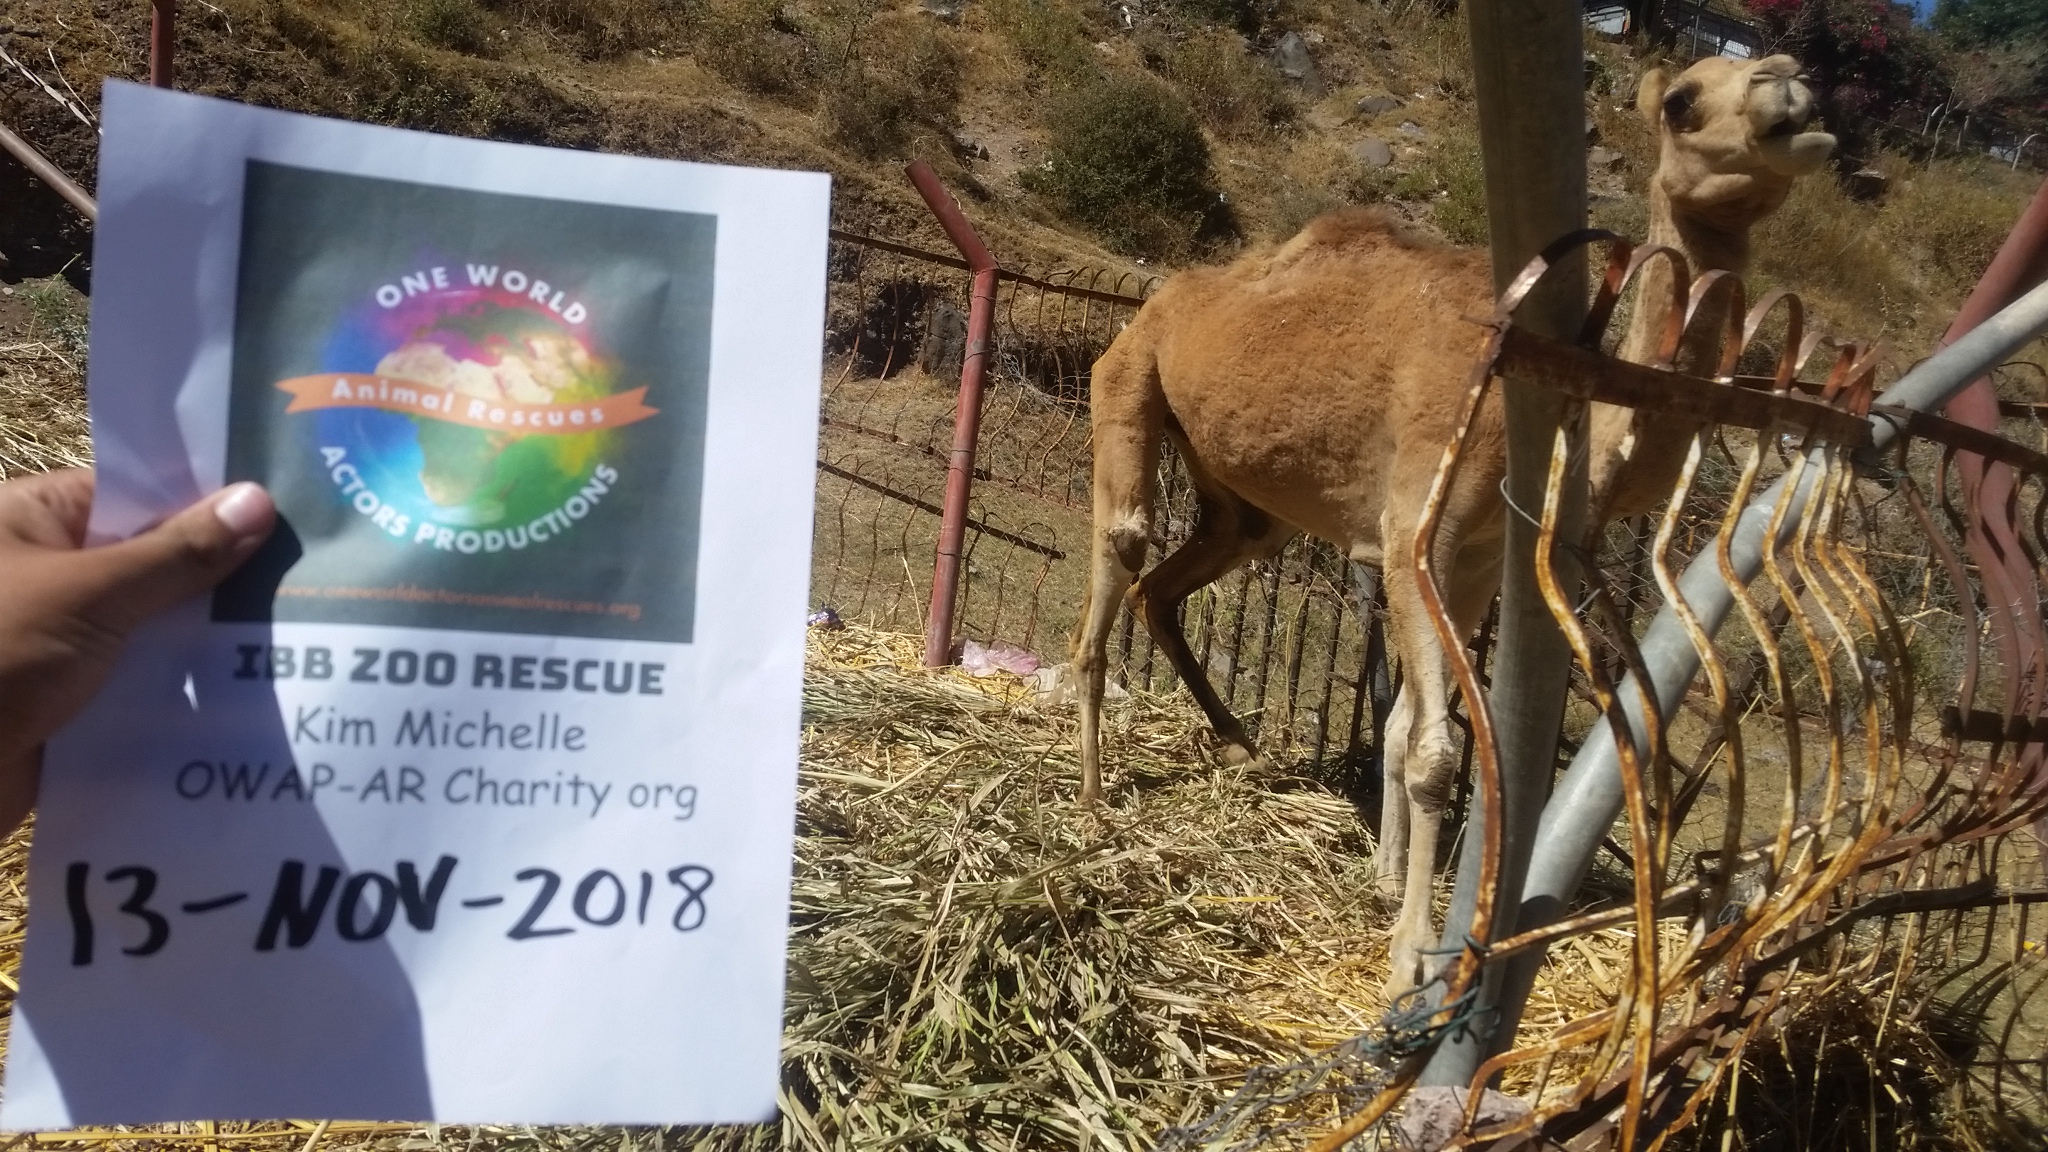 ibb zoo feeding camels fodder by OWAP-AR provider hisham pic 13 NOV 2018.jpg